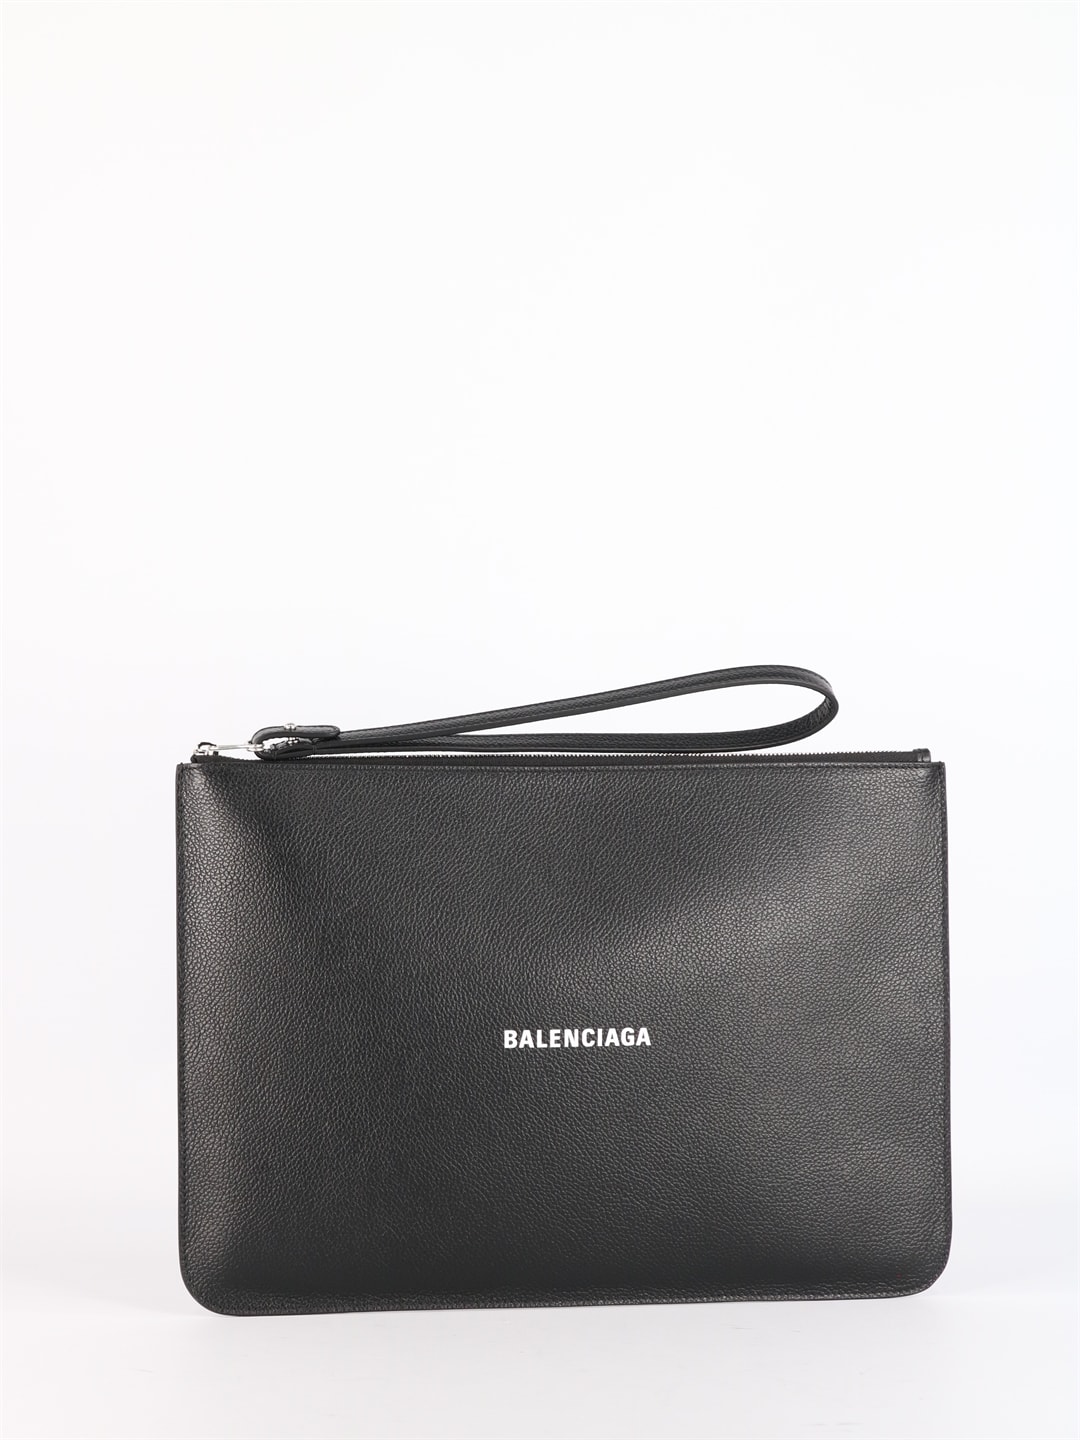 Balenciaga Black Leather Clutch Bag With Logo